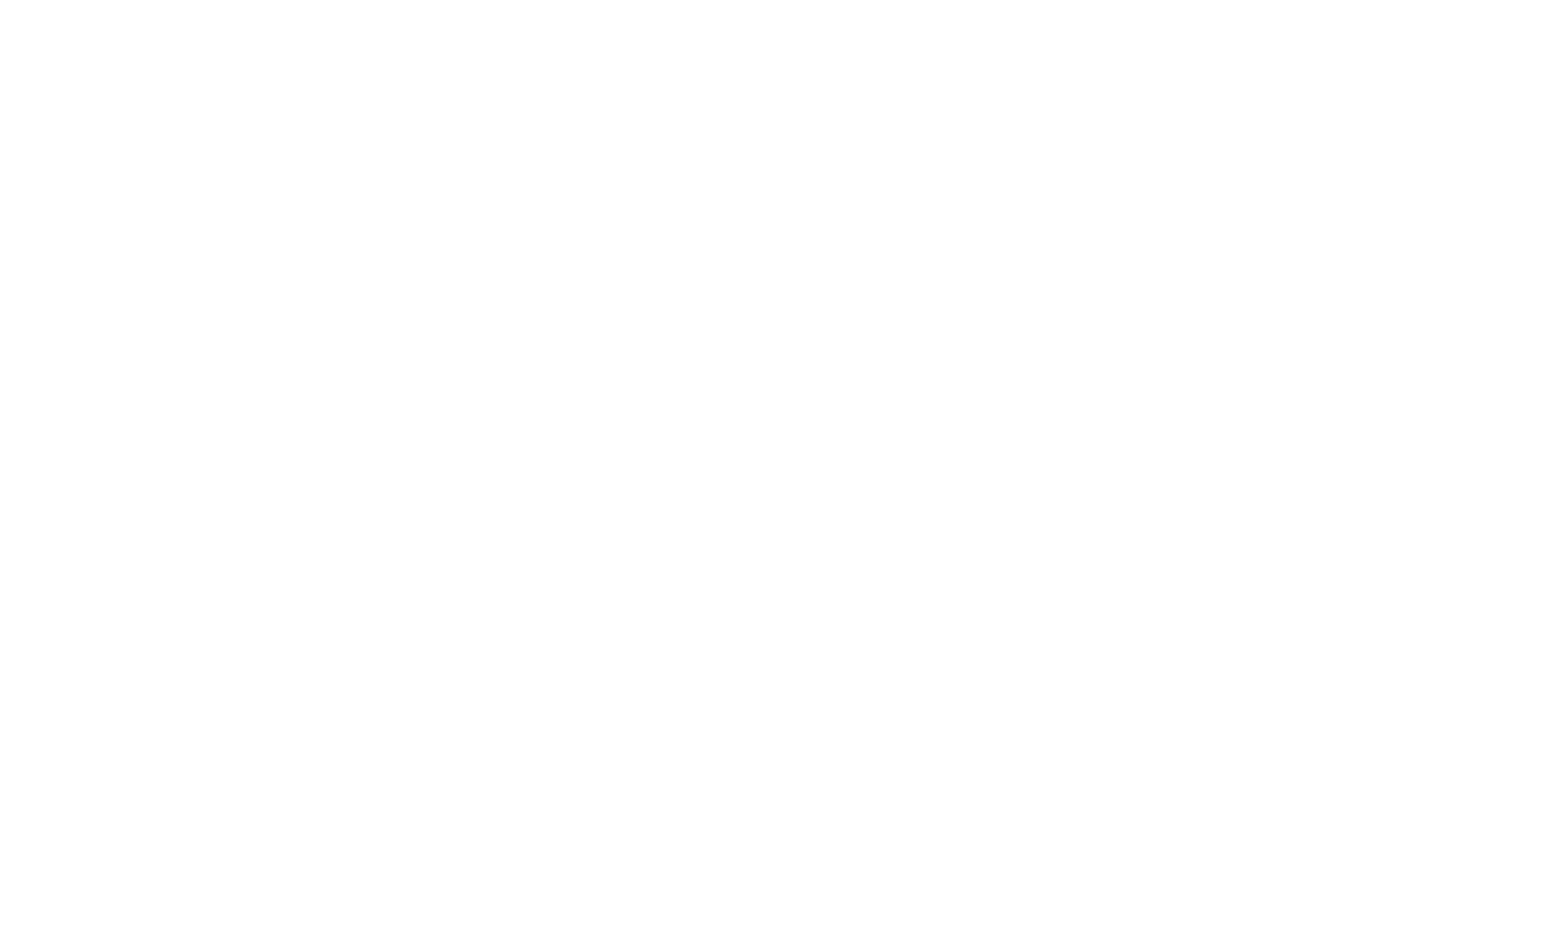 4,223 Letter Gf Logo Images, Stock Photos & Vectors | Shutterstock